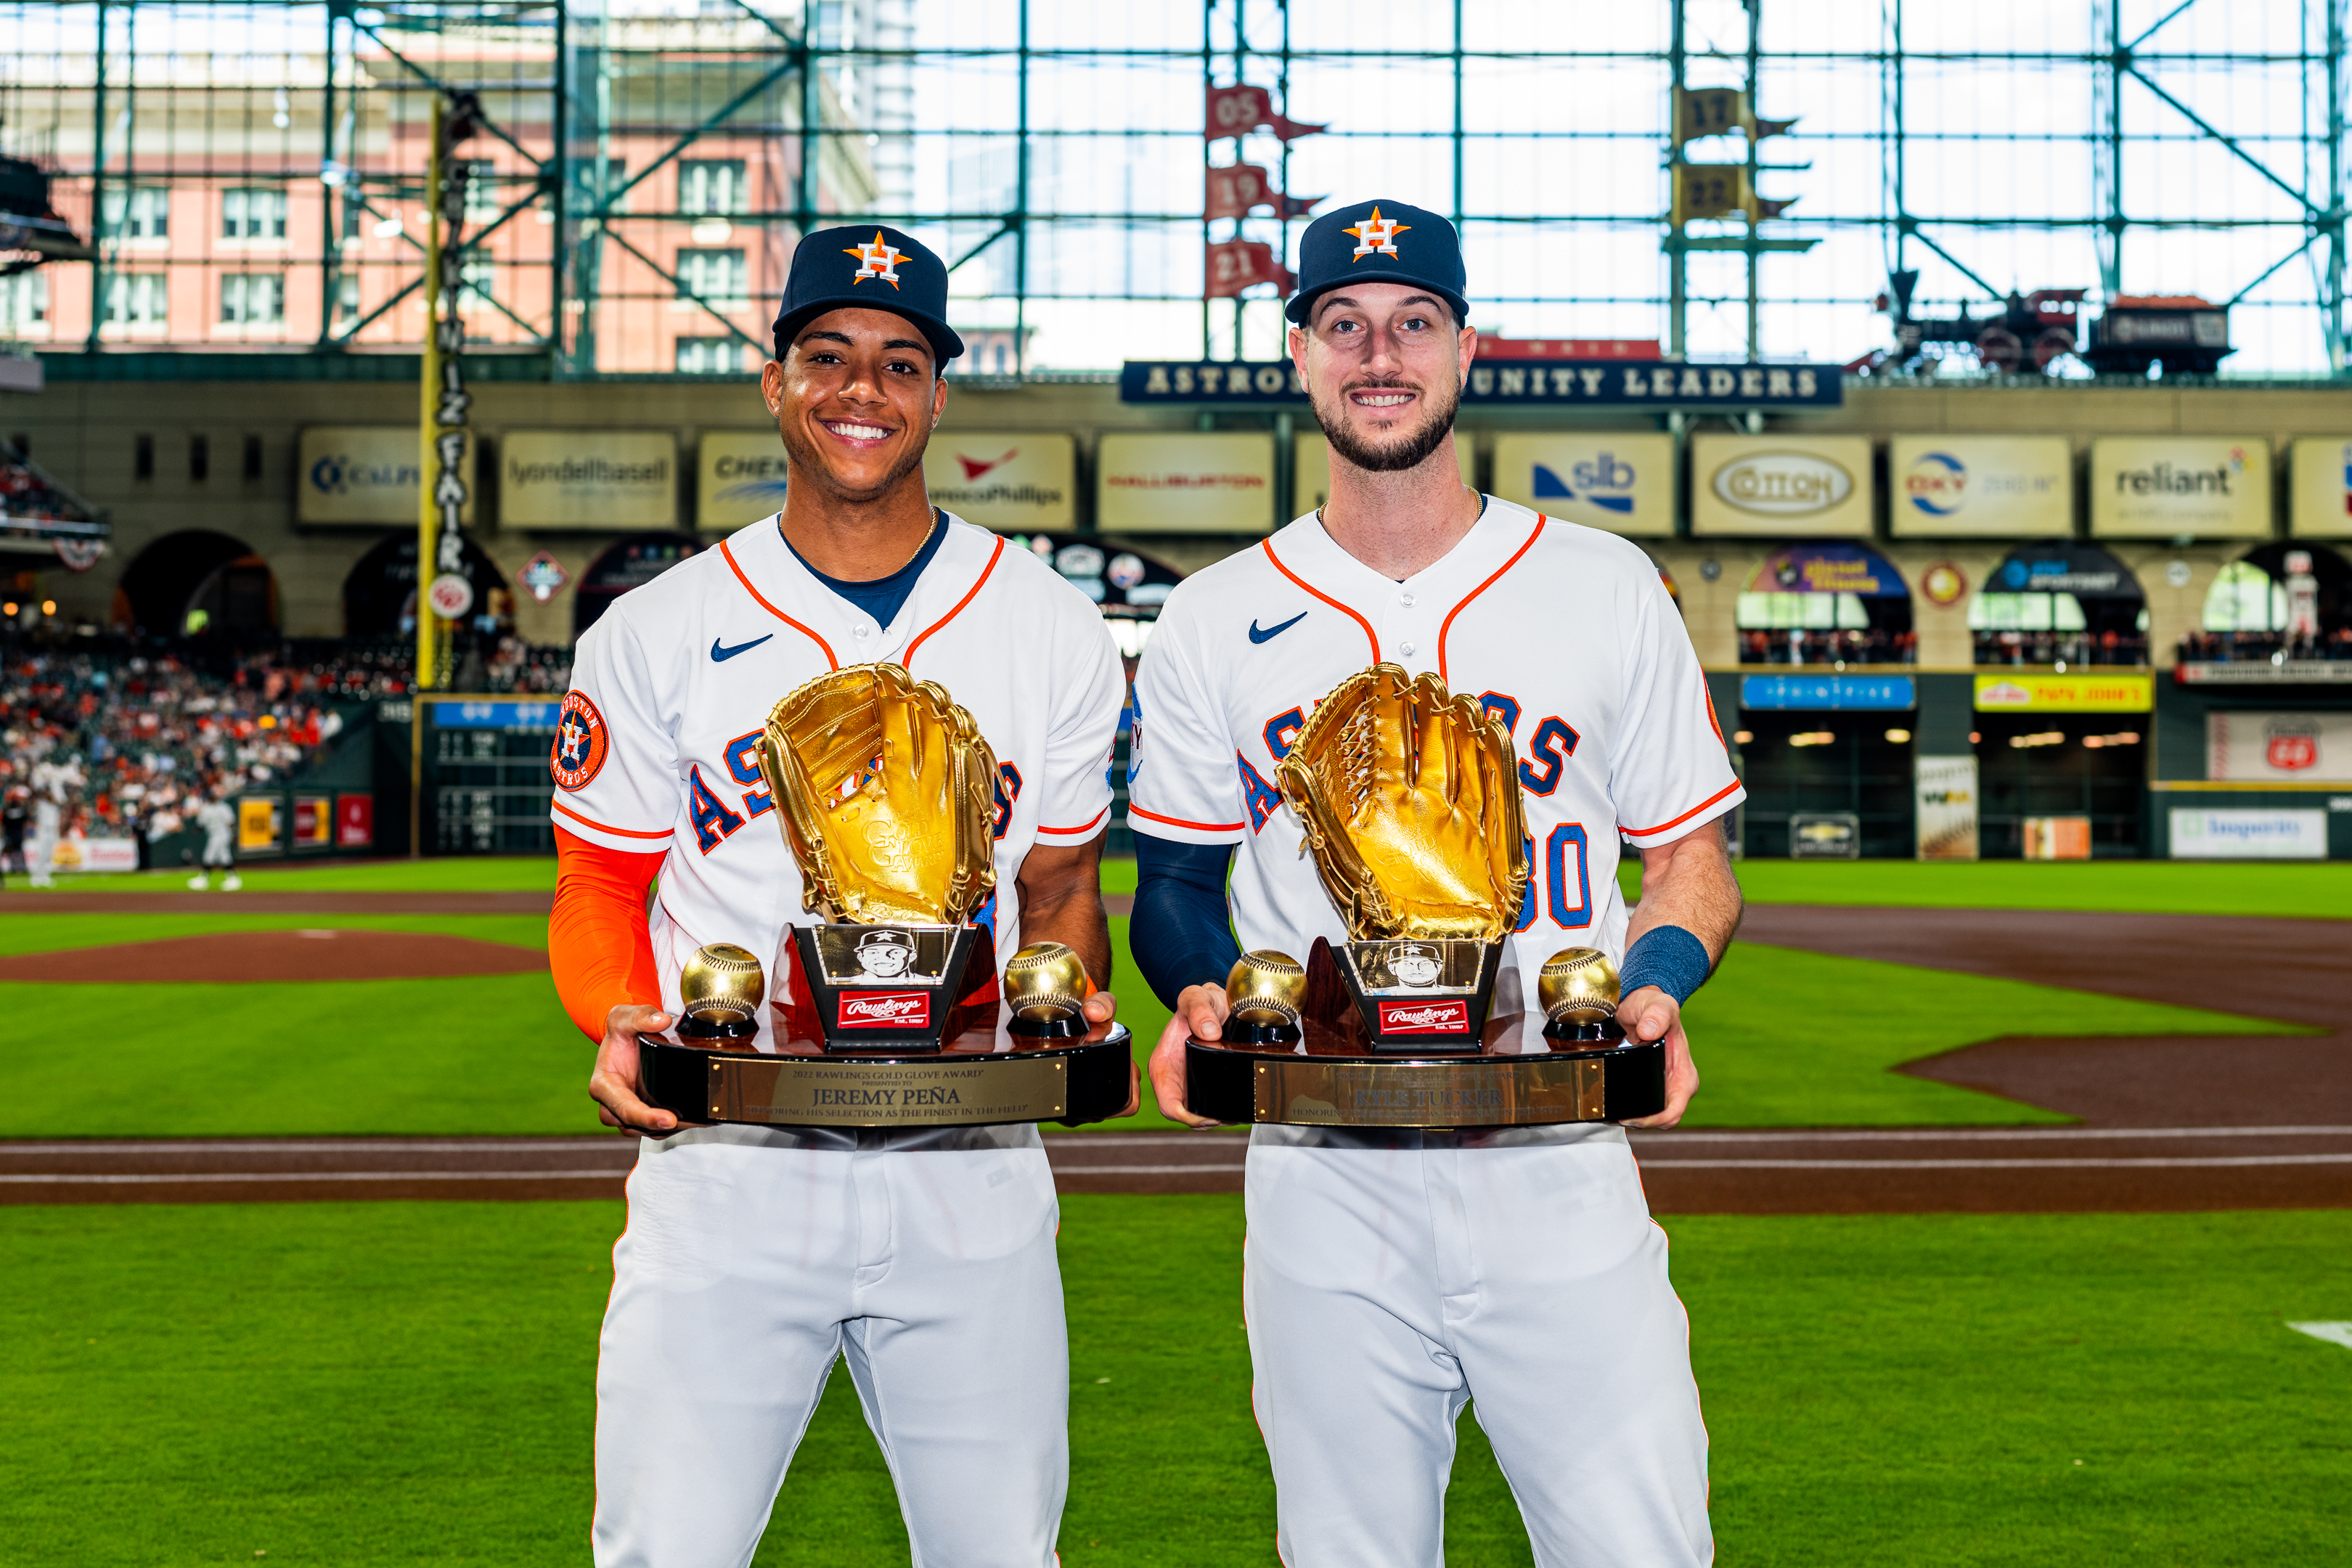 GOLD GLOVE WINNERS: Astros Jeremy Peña and Kyle Tucker earn elite award  ahead of World Series Game 3